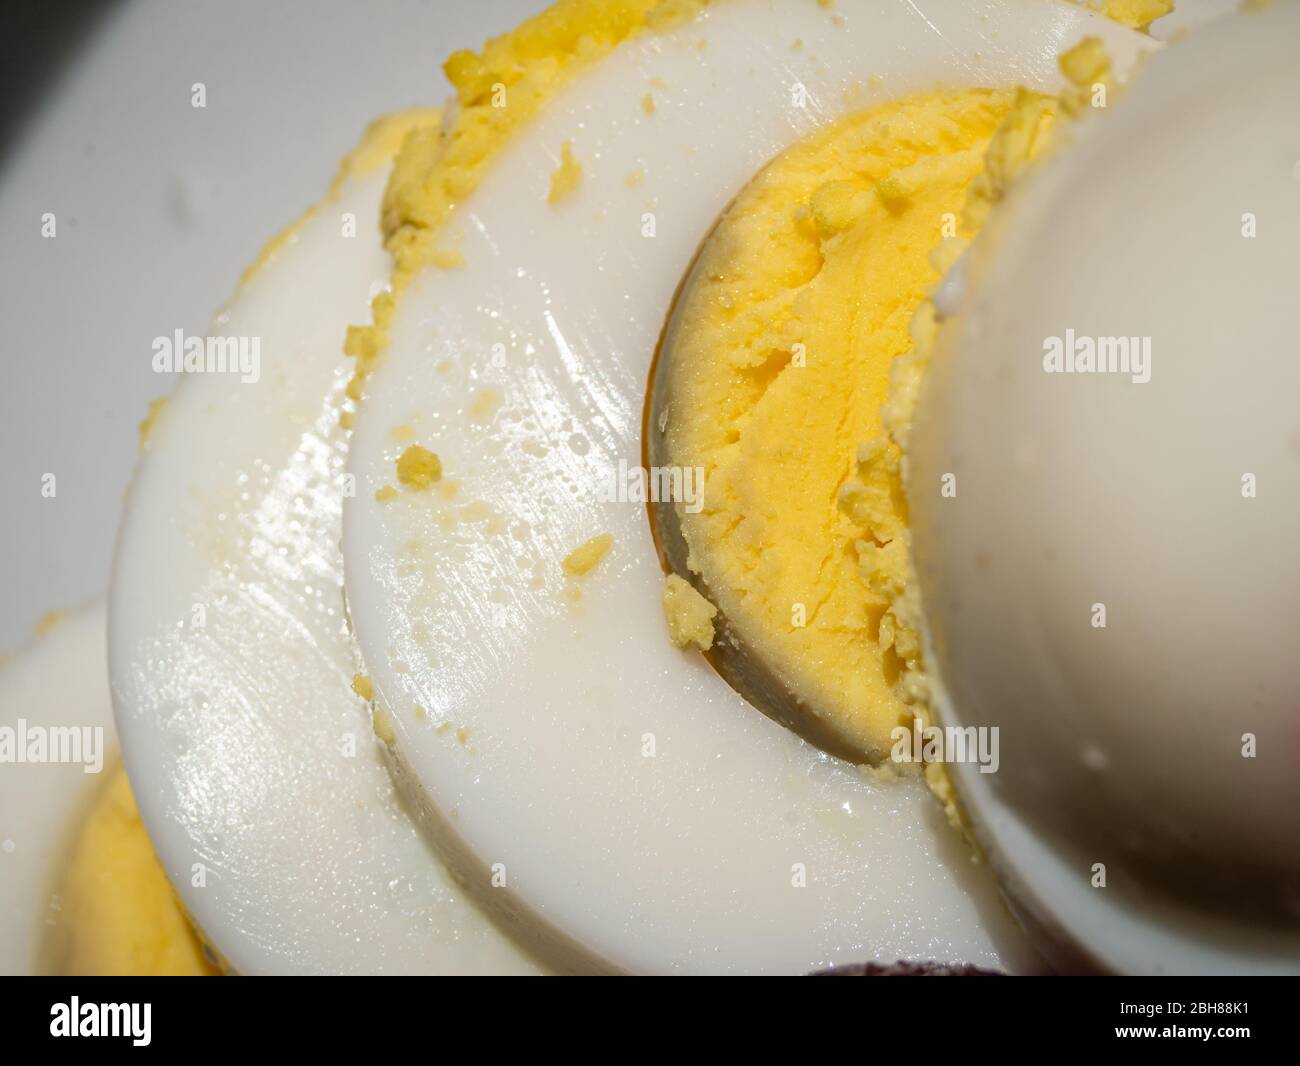 Sliced boiled egg on a summer salad Stock Photo